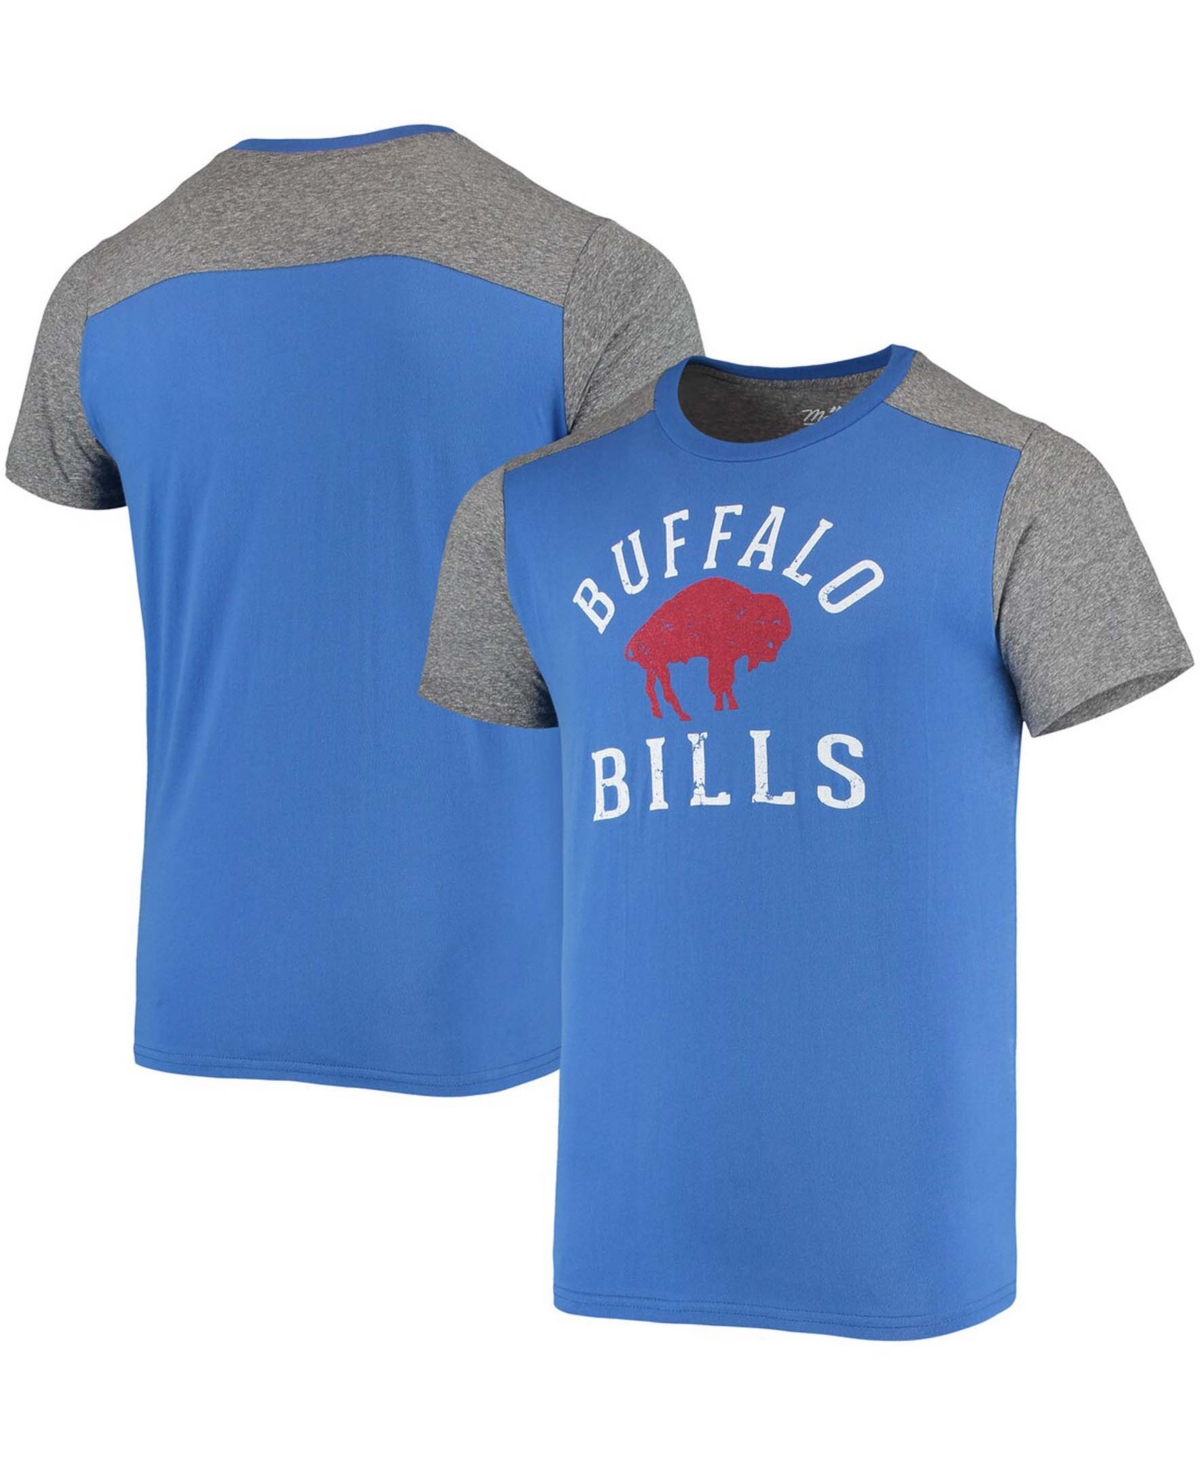 Men's Royal, Heathered Gray Buffalo Bills Gridiron Classics Field Goal Slub T-shirt - Royal, Heathered Gray